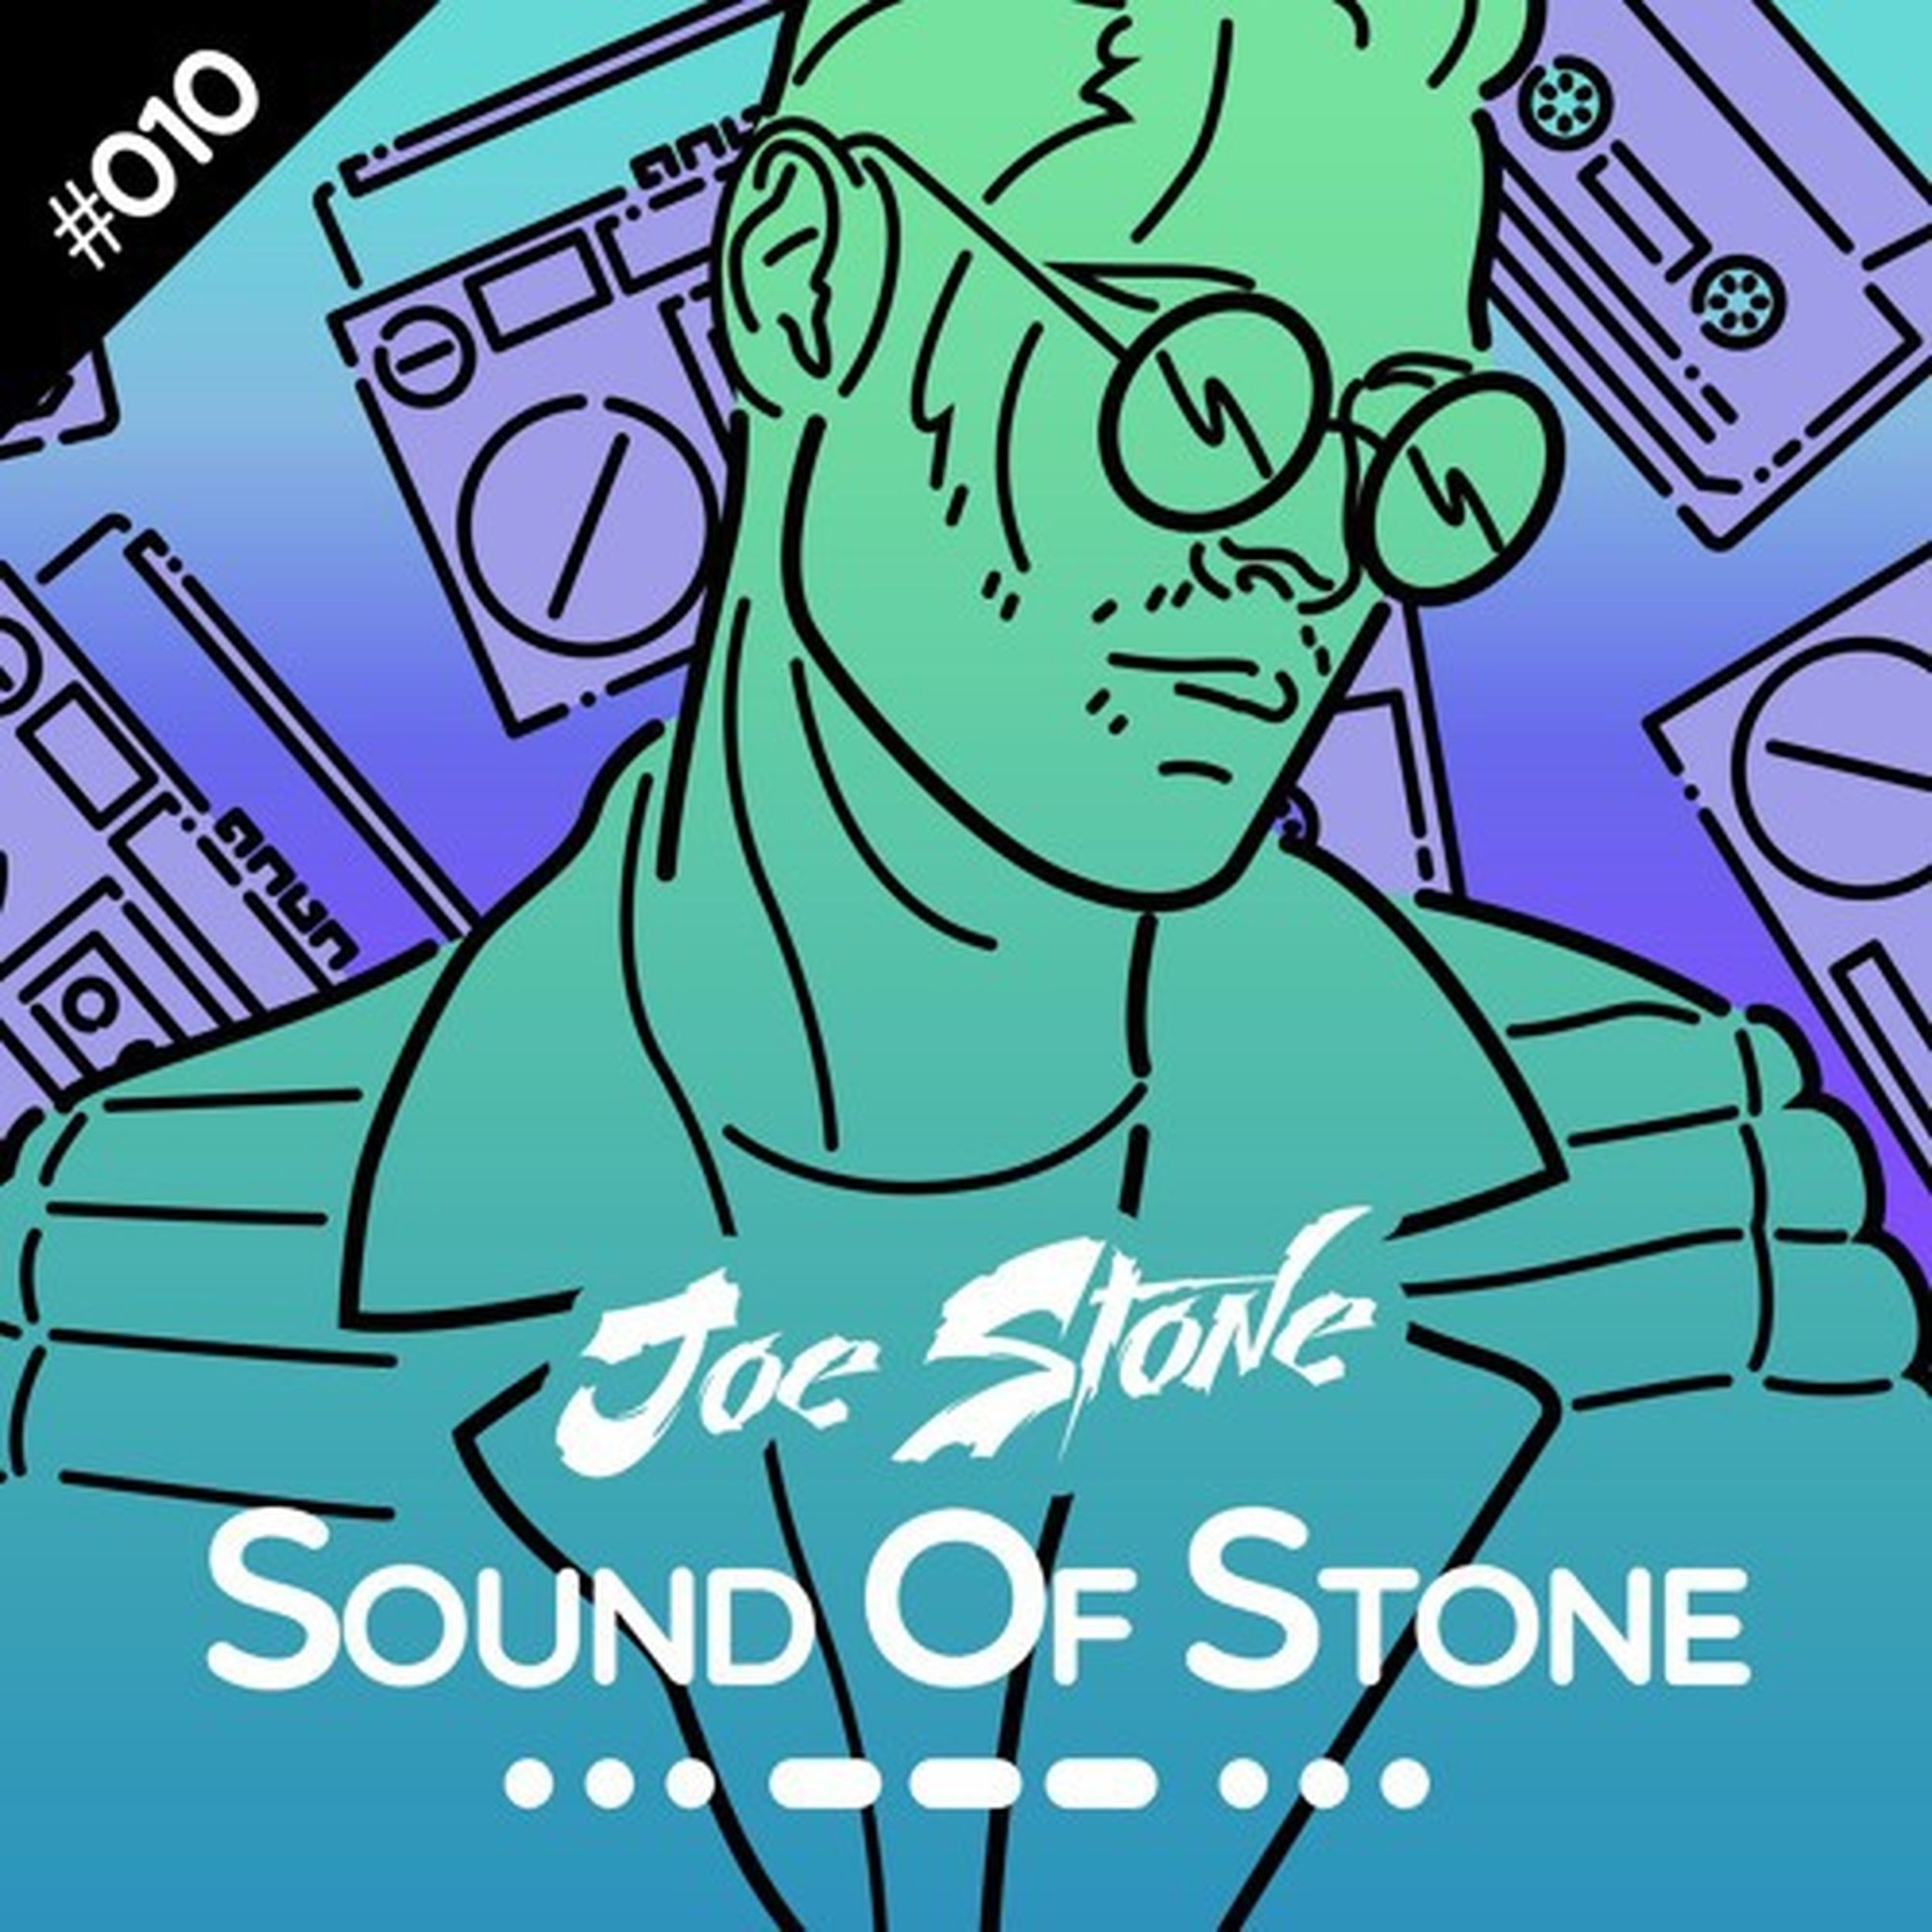 Joe stone. Stone саунд.